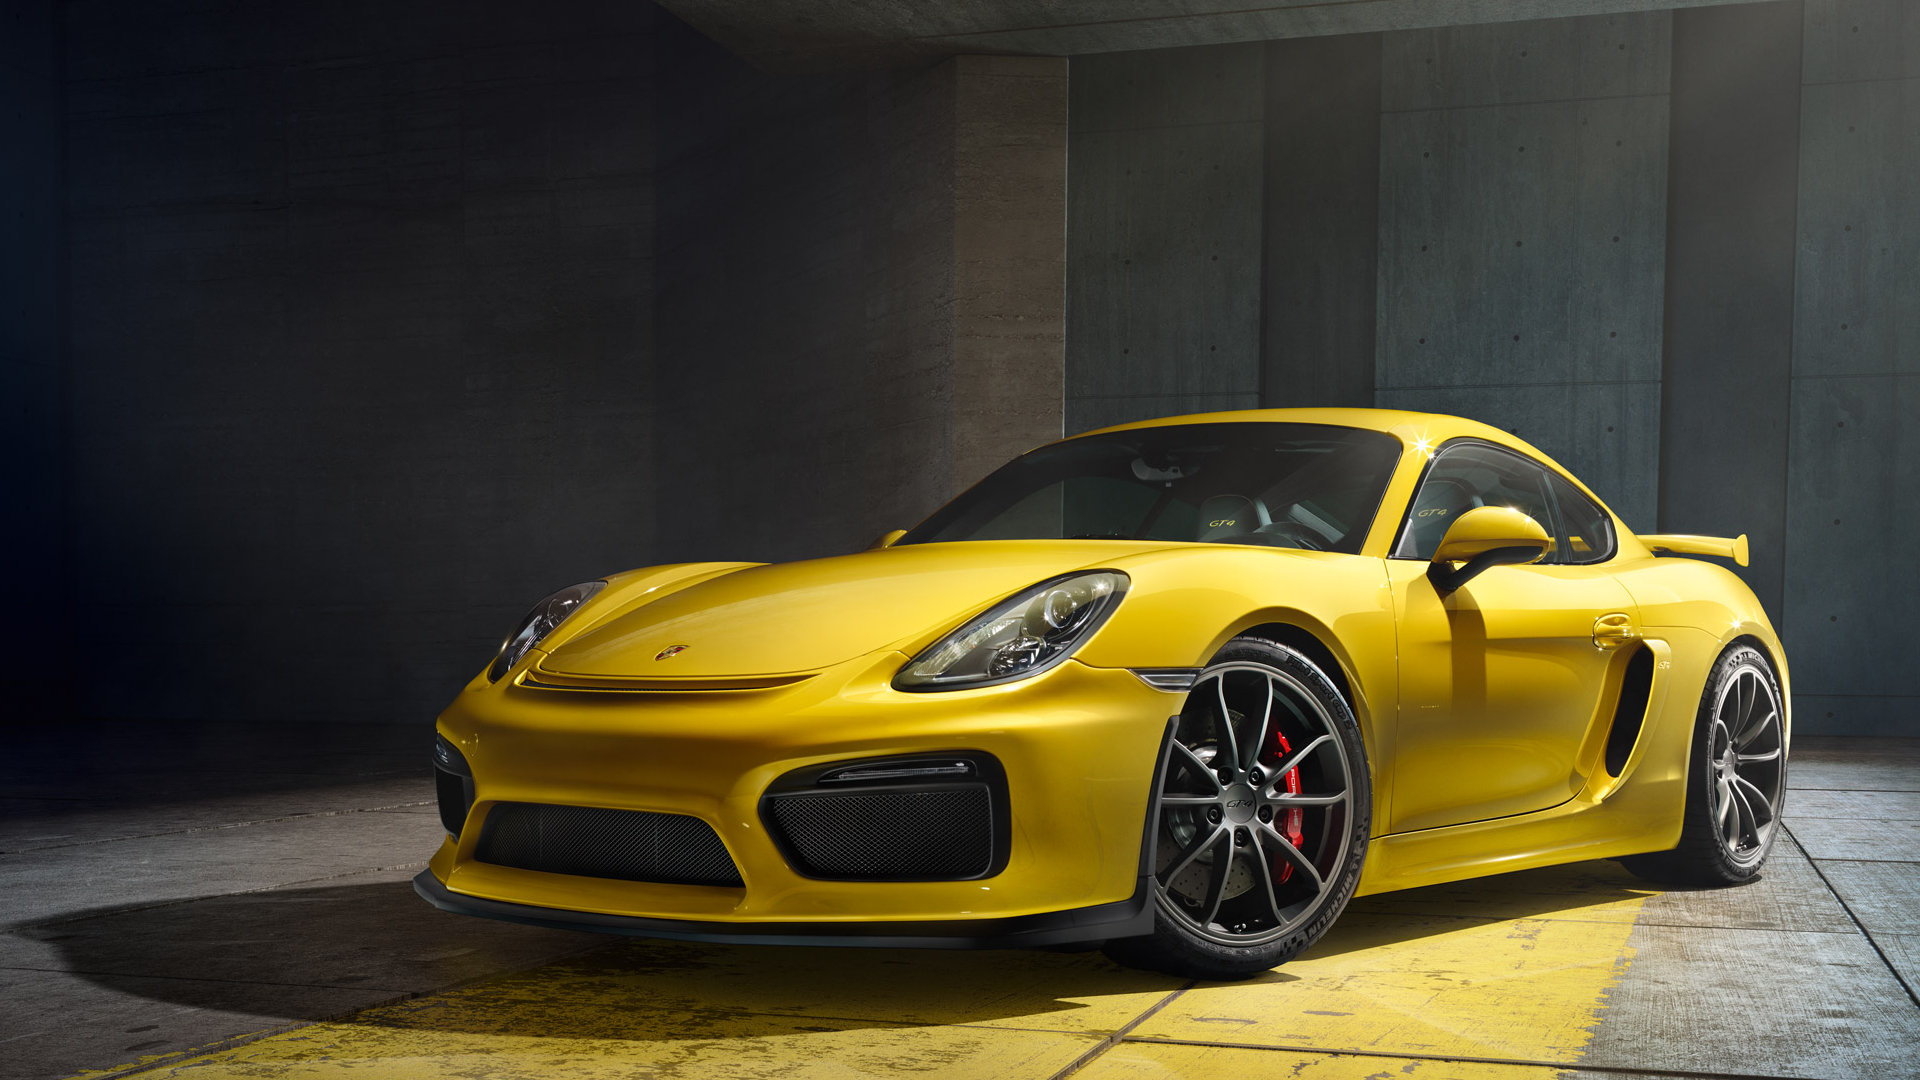 Download 1080p Porsche Cayman GT4 desktop background ID:274543 for free